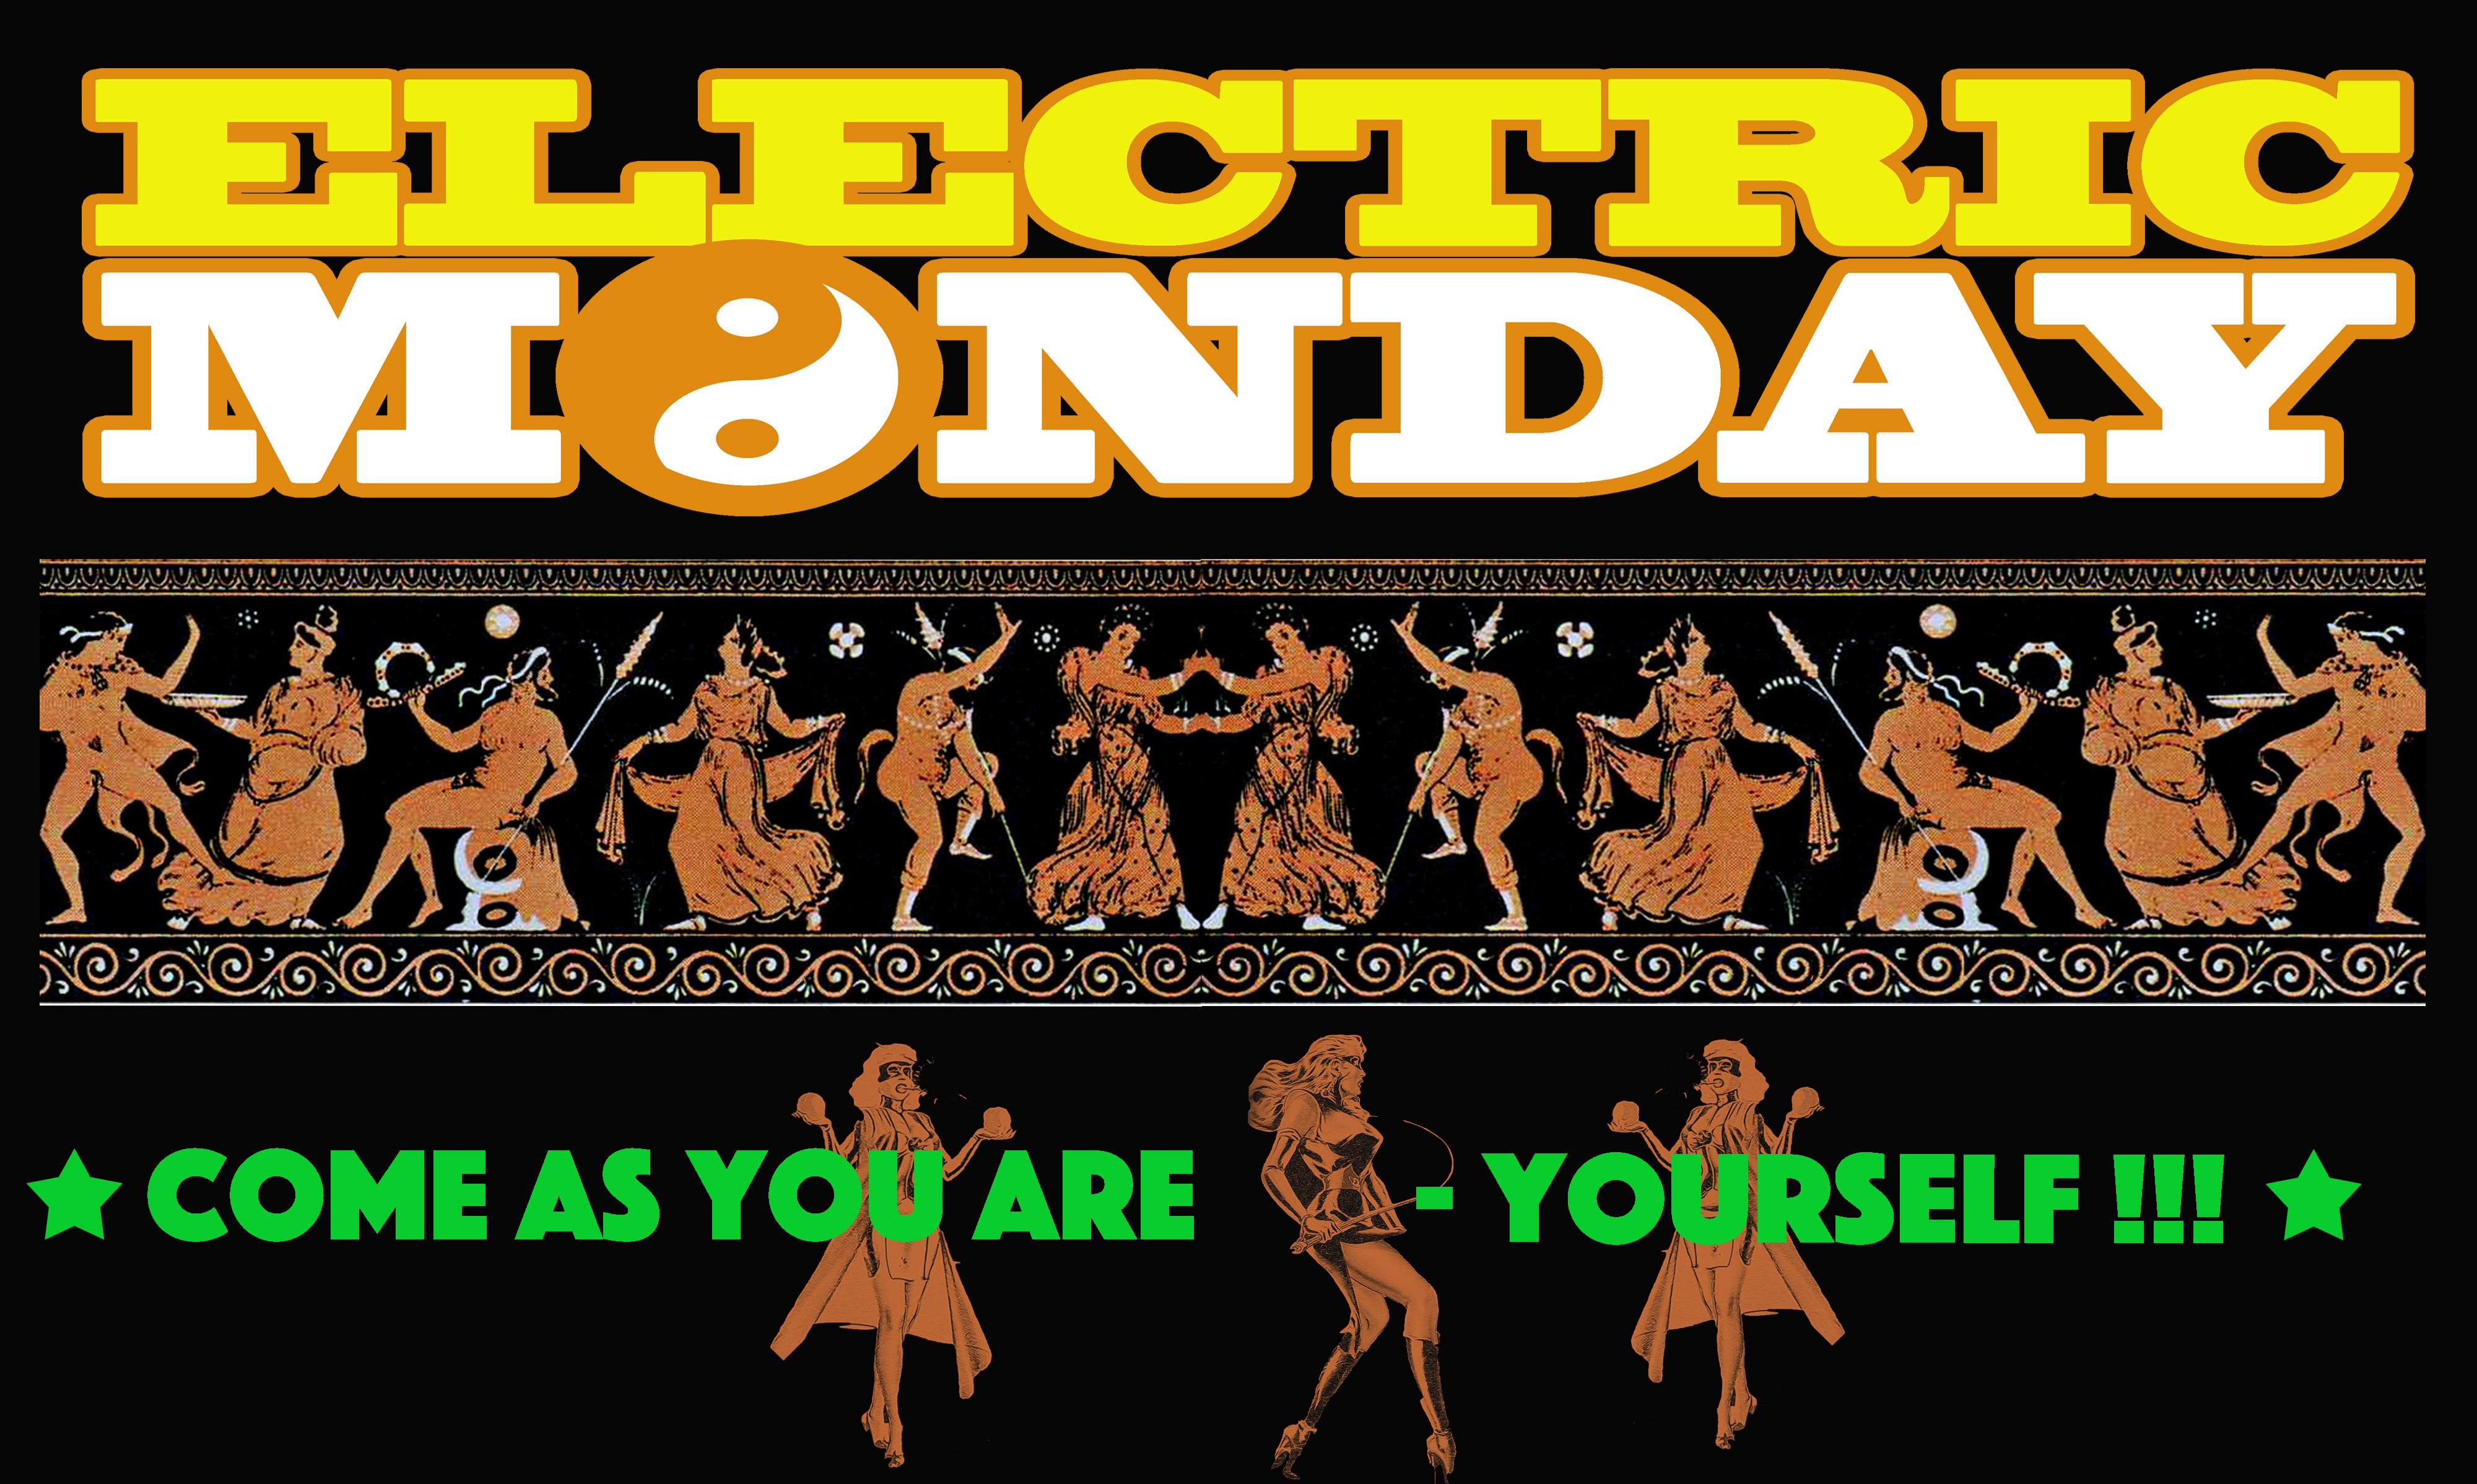 Electric Monday@Kitkat - フライヤー表